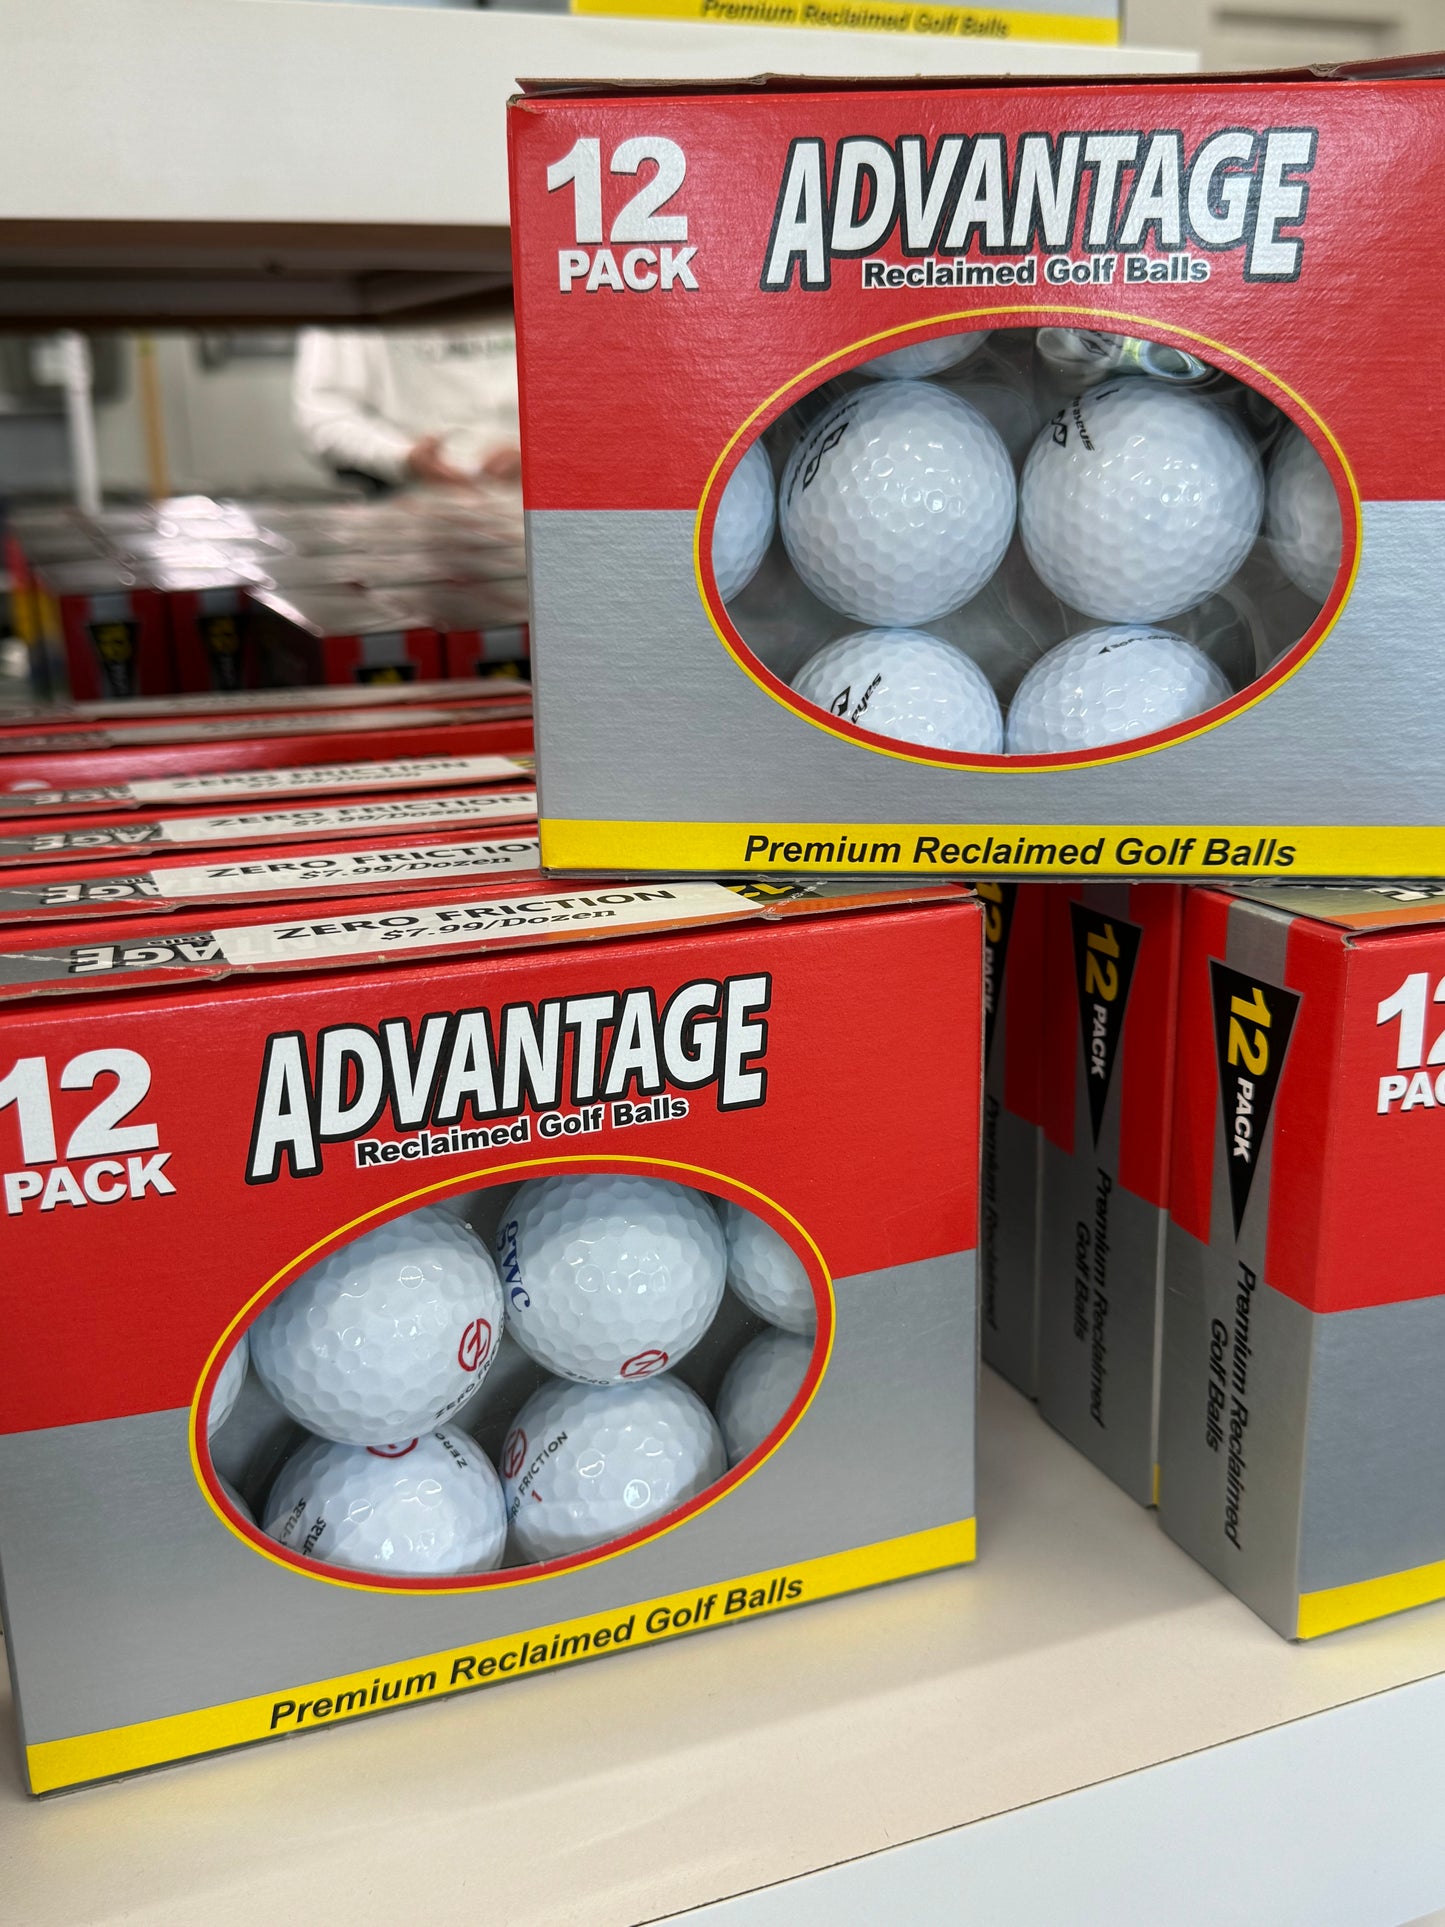 Advantage 12 pack Golf balls mix